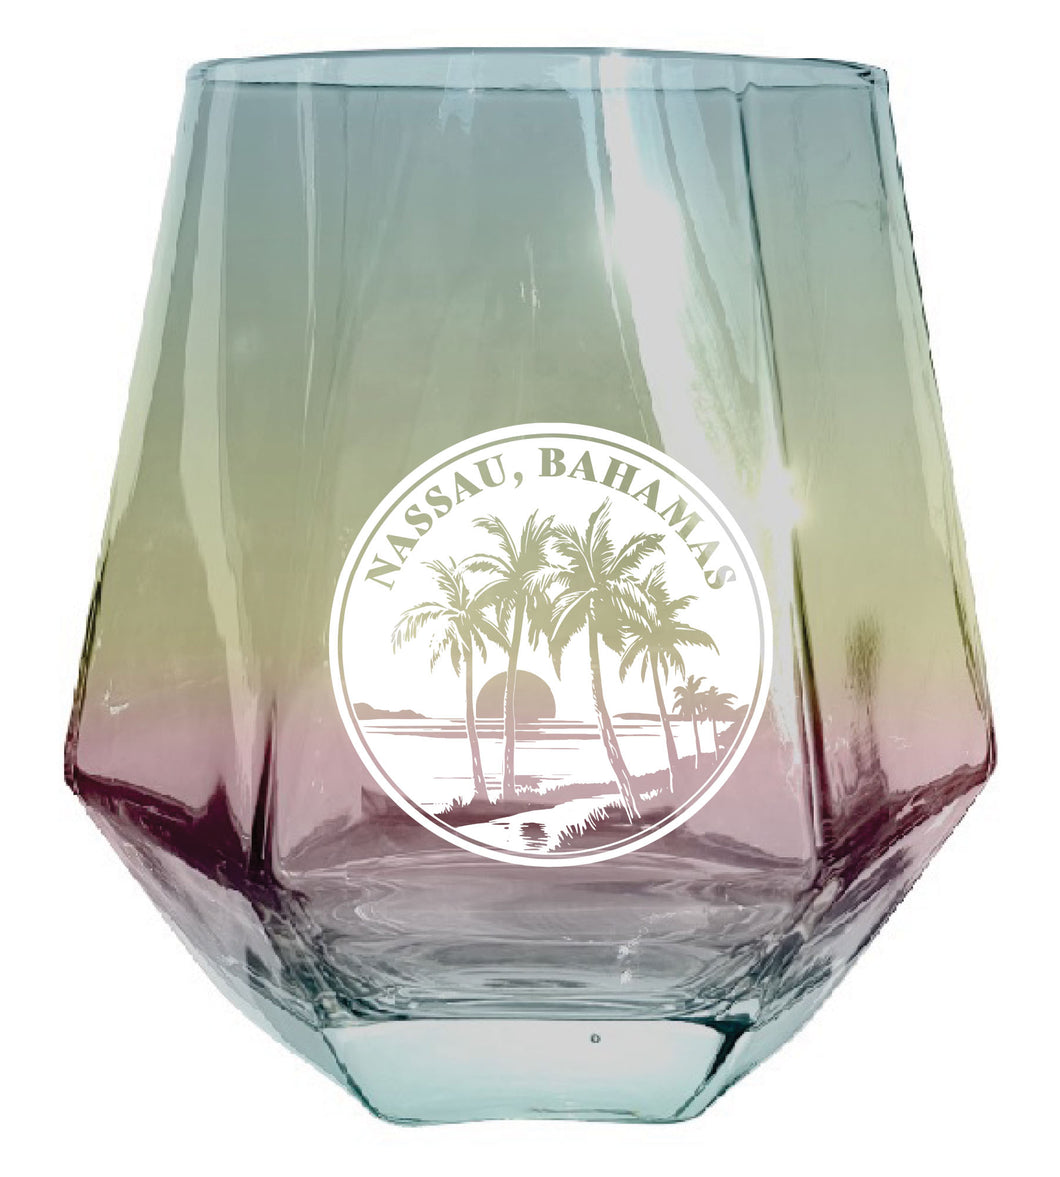 Nassau the Bahamas Souvenir Wine Glass EngravedDiamond 15 oz clear Iridescent